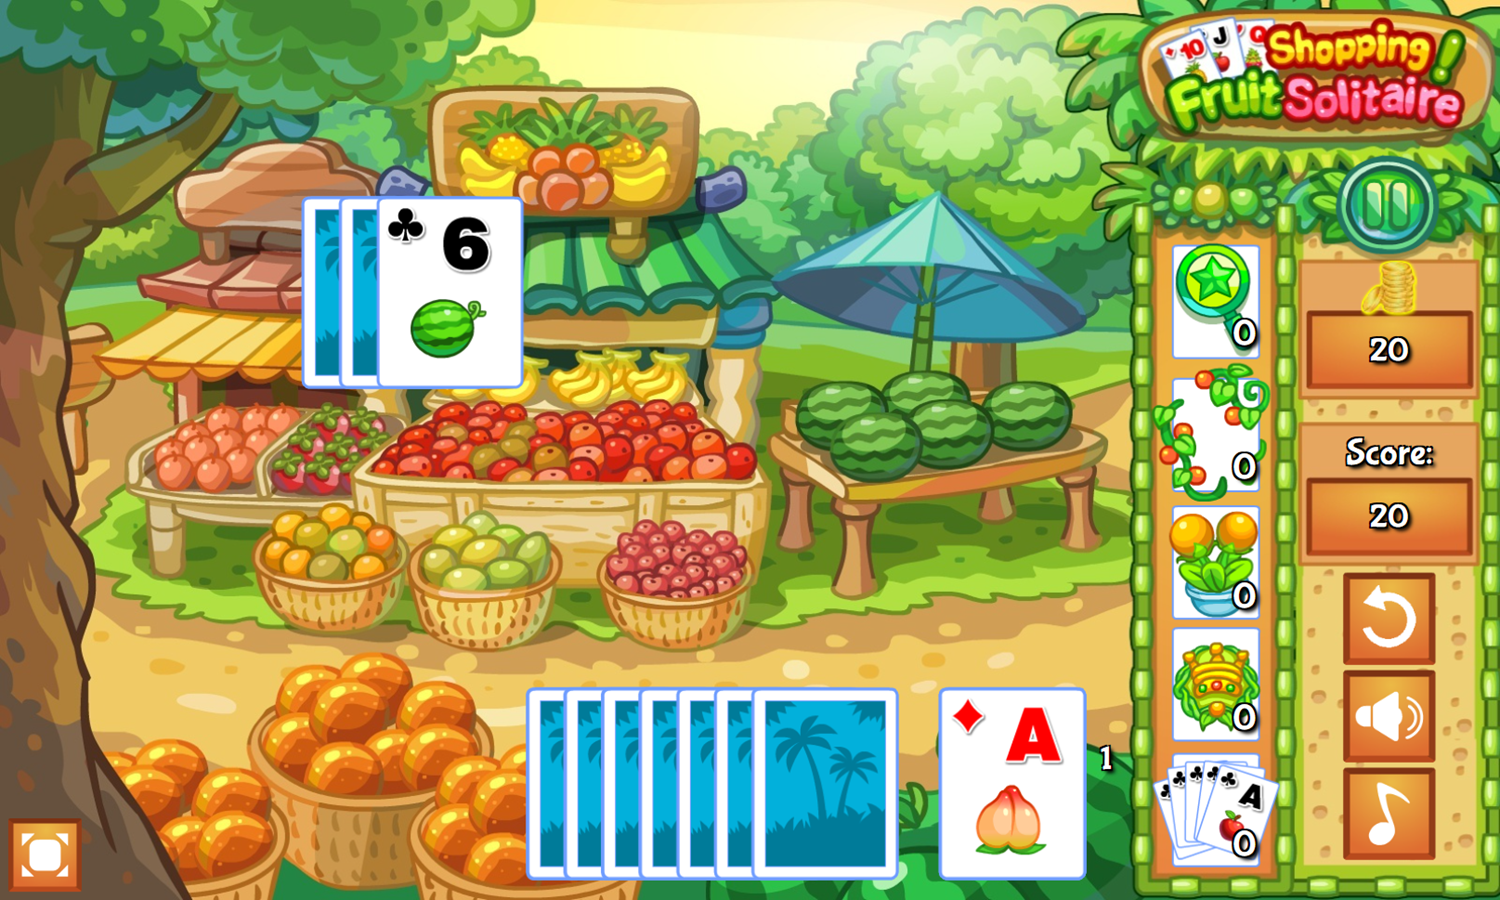 Tri-Fruit Solitaire Game Play Screenshot.